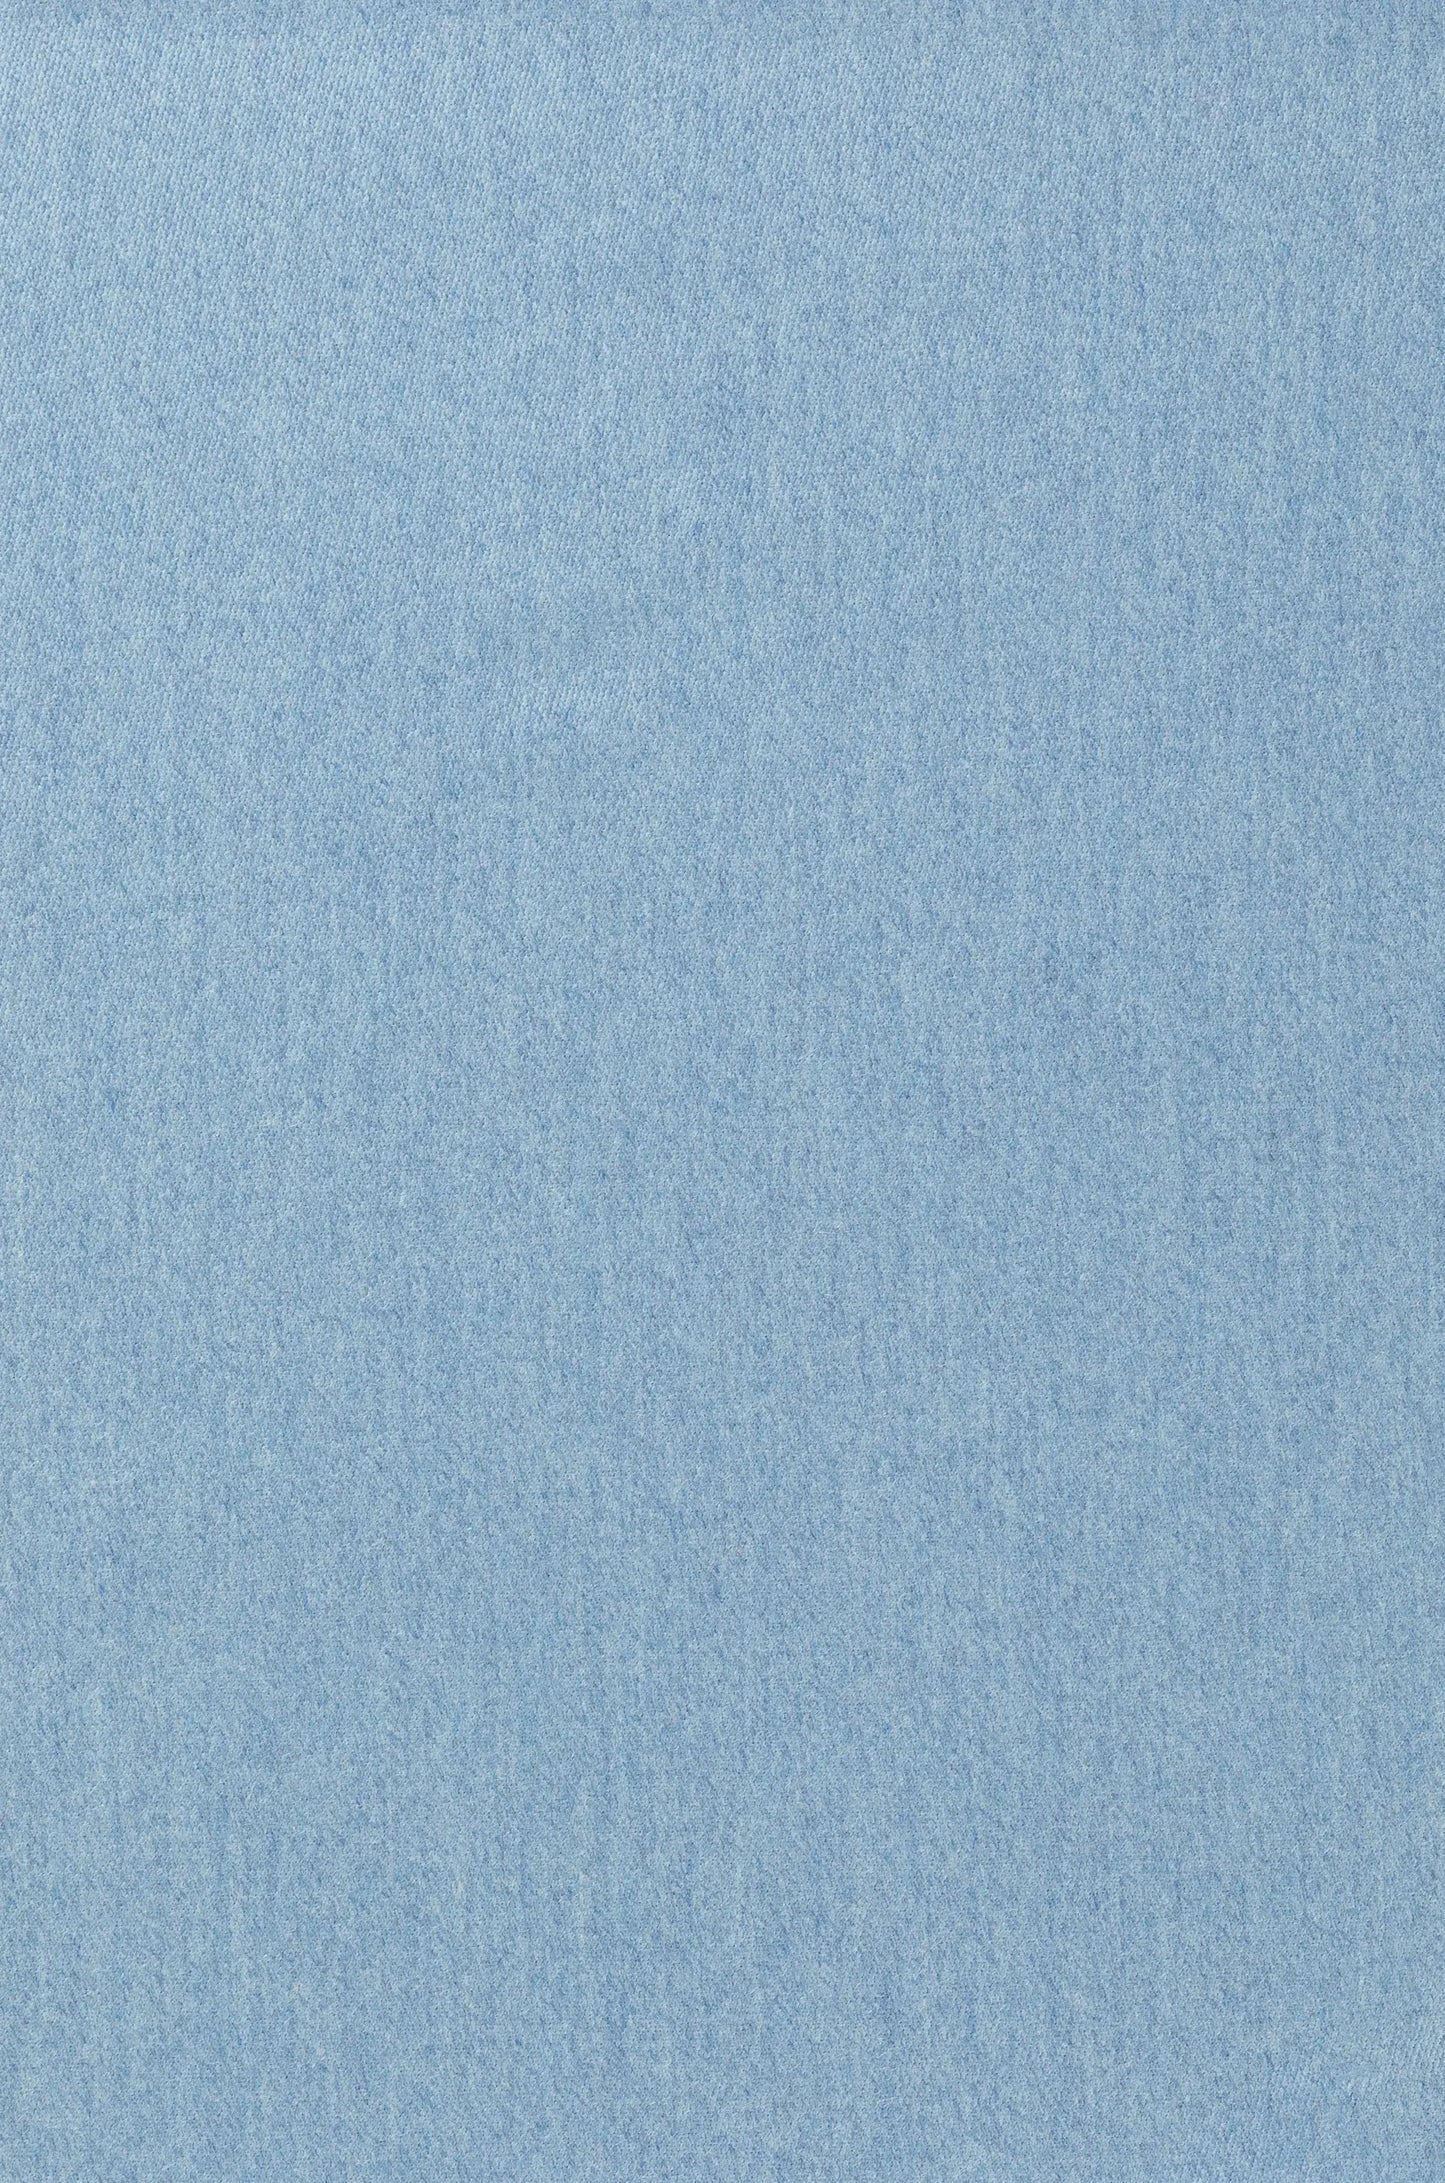 Tivoli Mélange Sateen Merino Wool Fabric in Hydrangea CD000526 UF321616